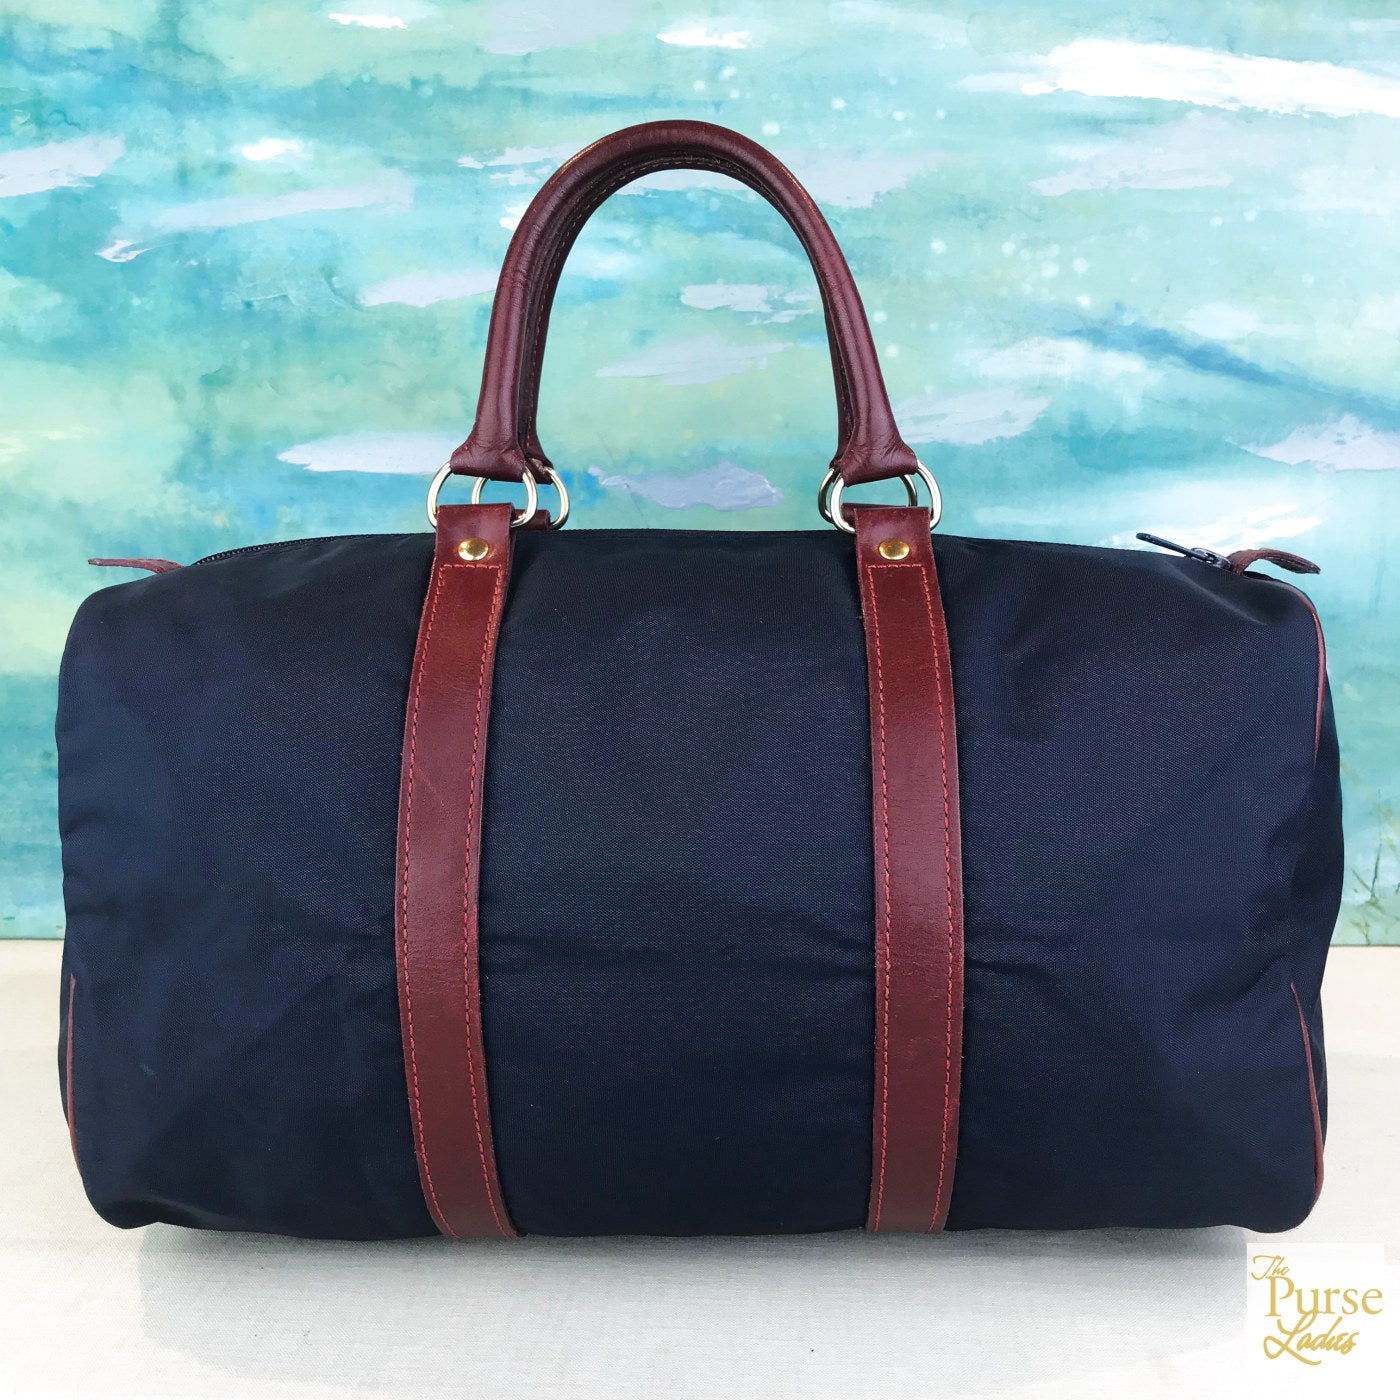 LONGCHAMP Navy Blue Nylon Maroon Leather Handbag Satchel Bag SALE! | eBay